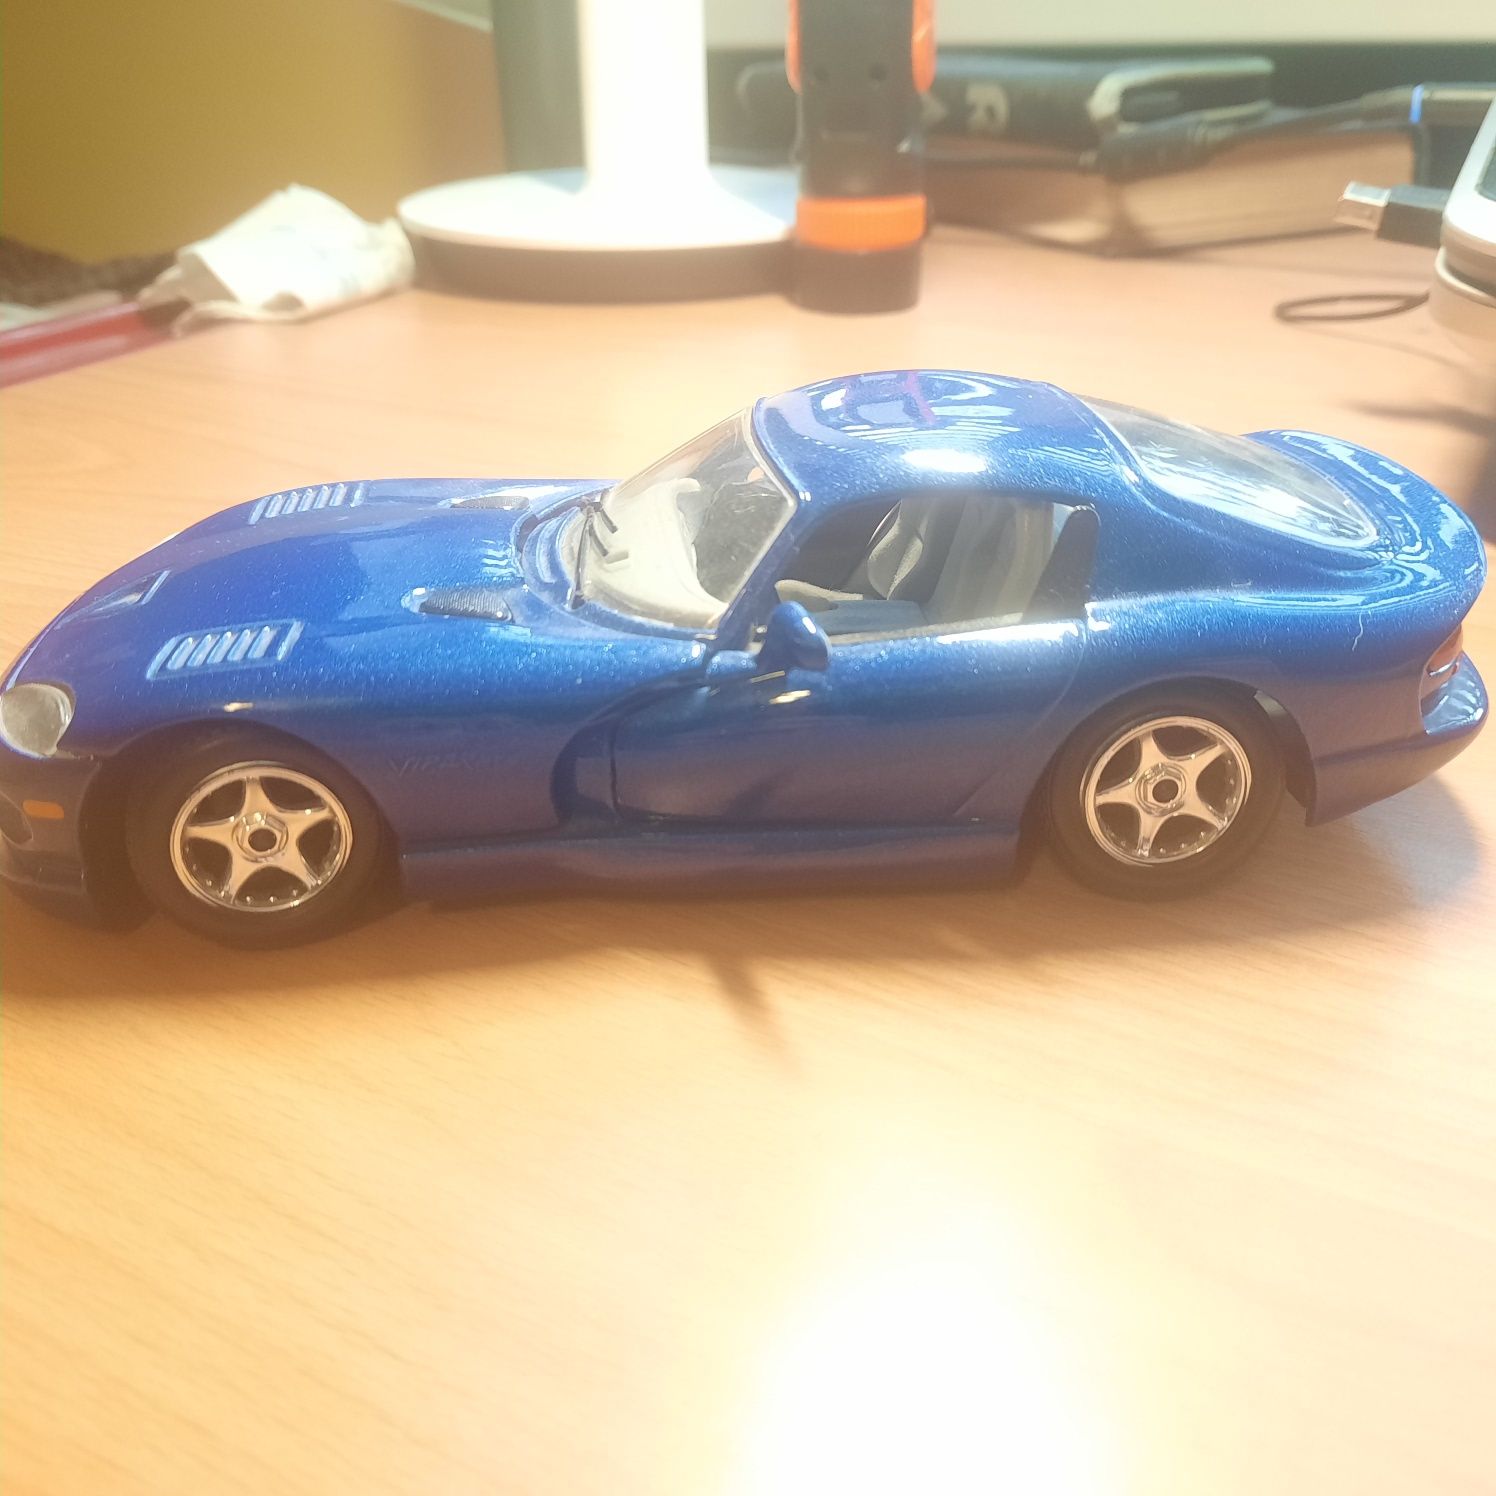 Іграшкова машинка Viper GTS coupe